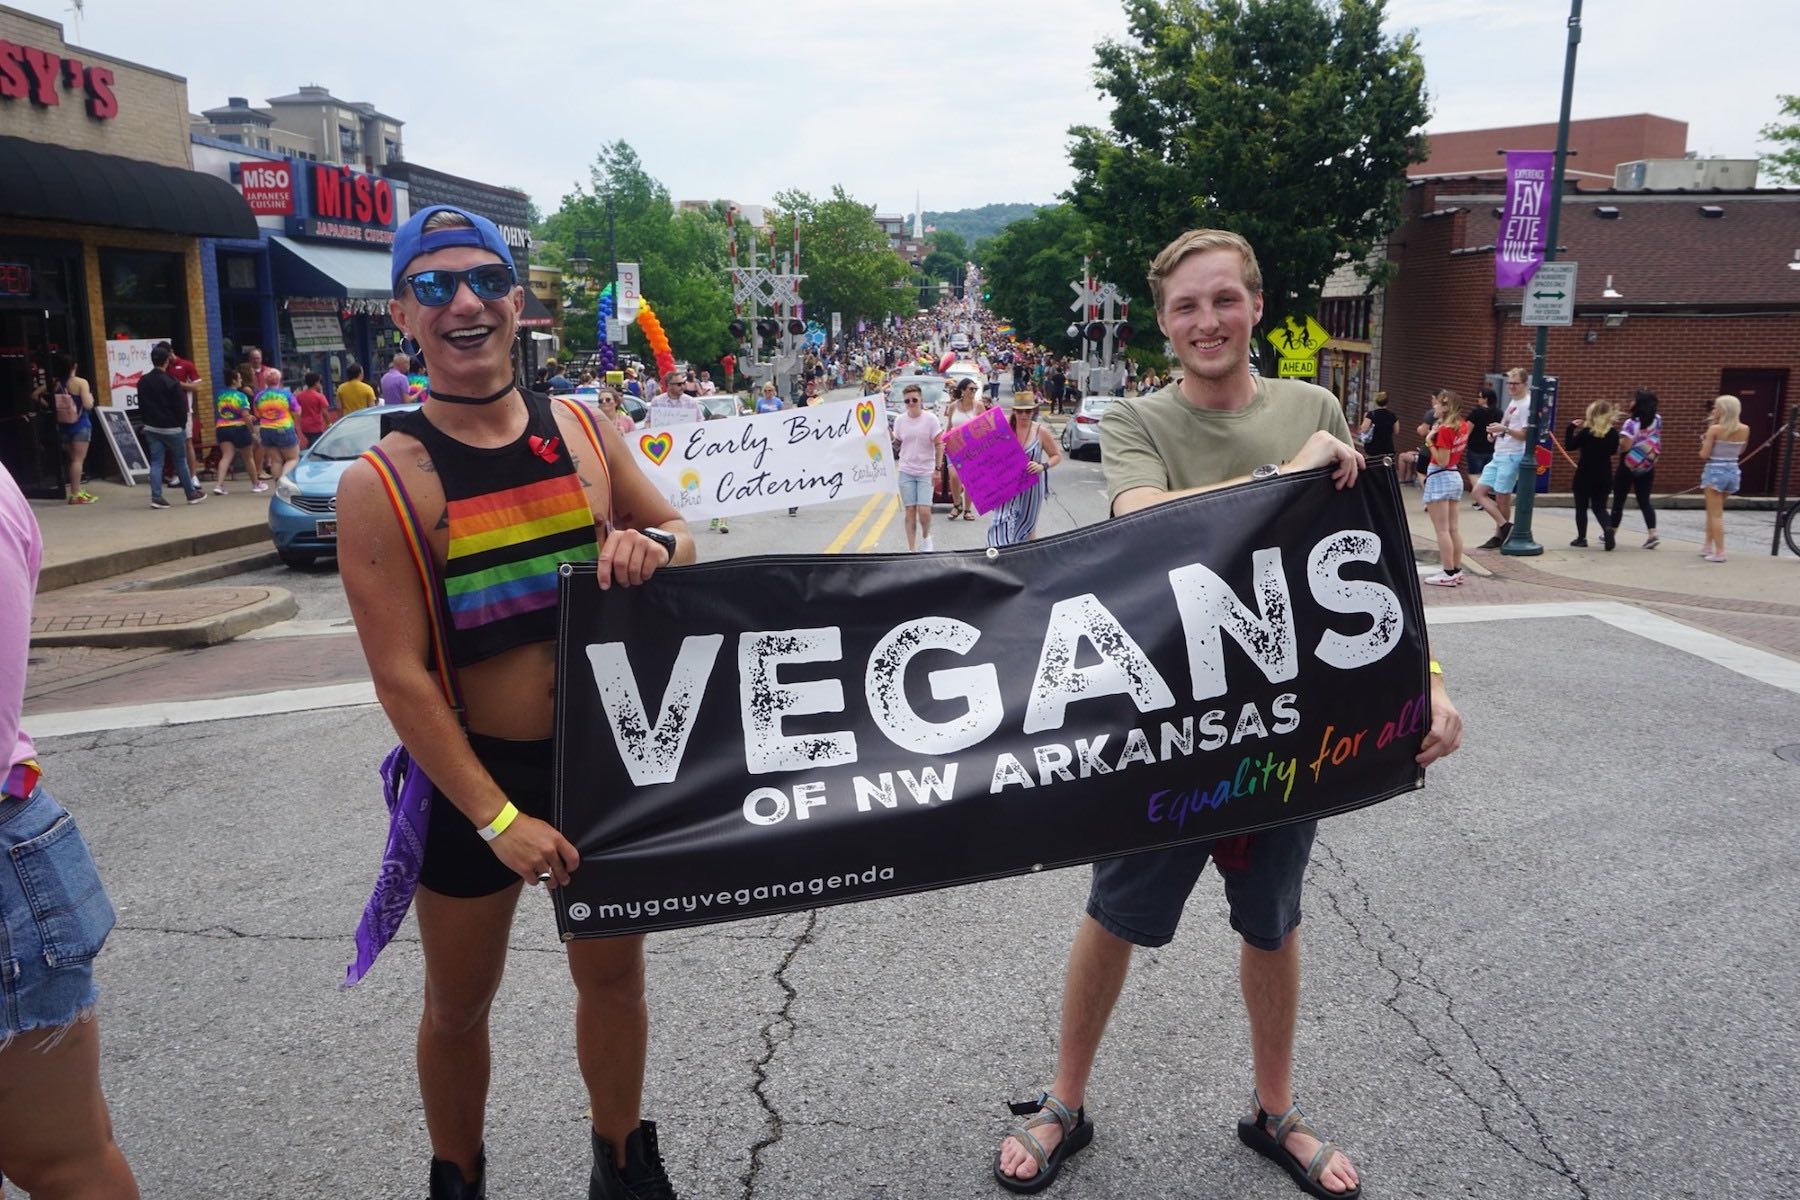 Nikos Pecoraro is an HIV+, genderqueer gay vegan from Arkansas. And PROUD. Credit: @mygayveganagenda